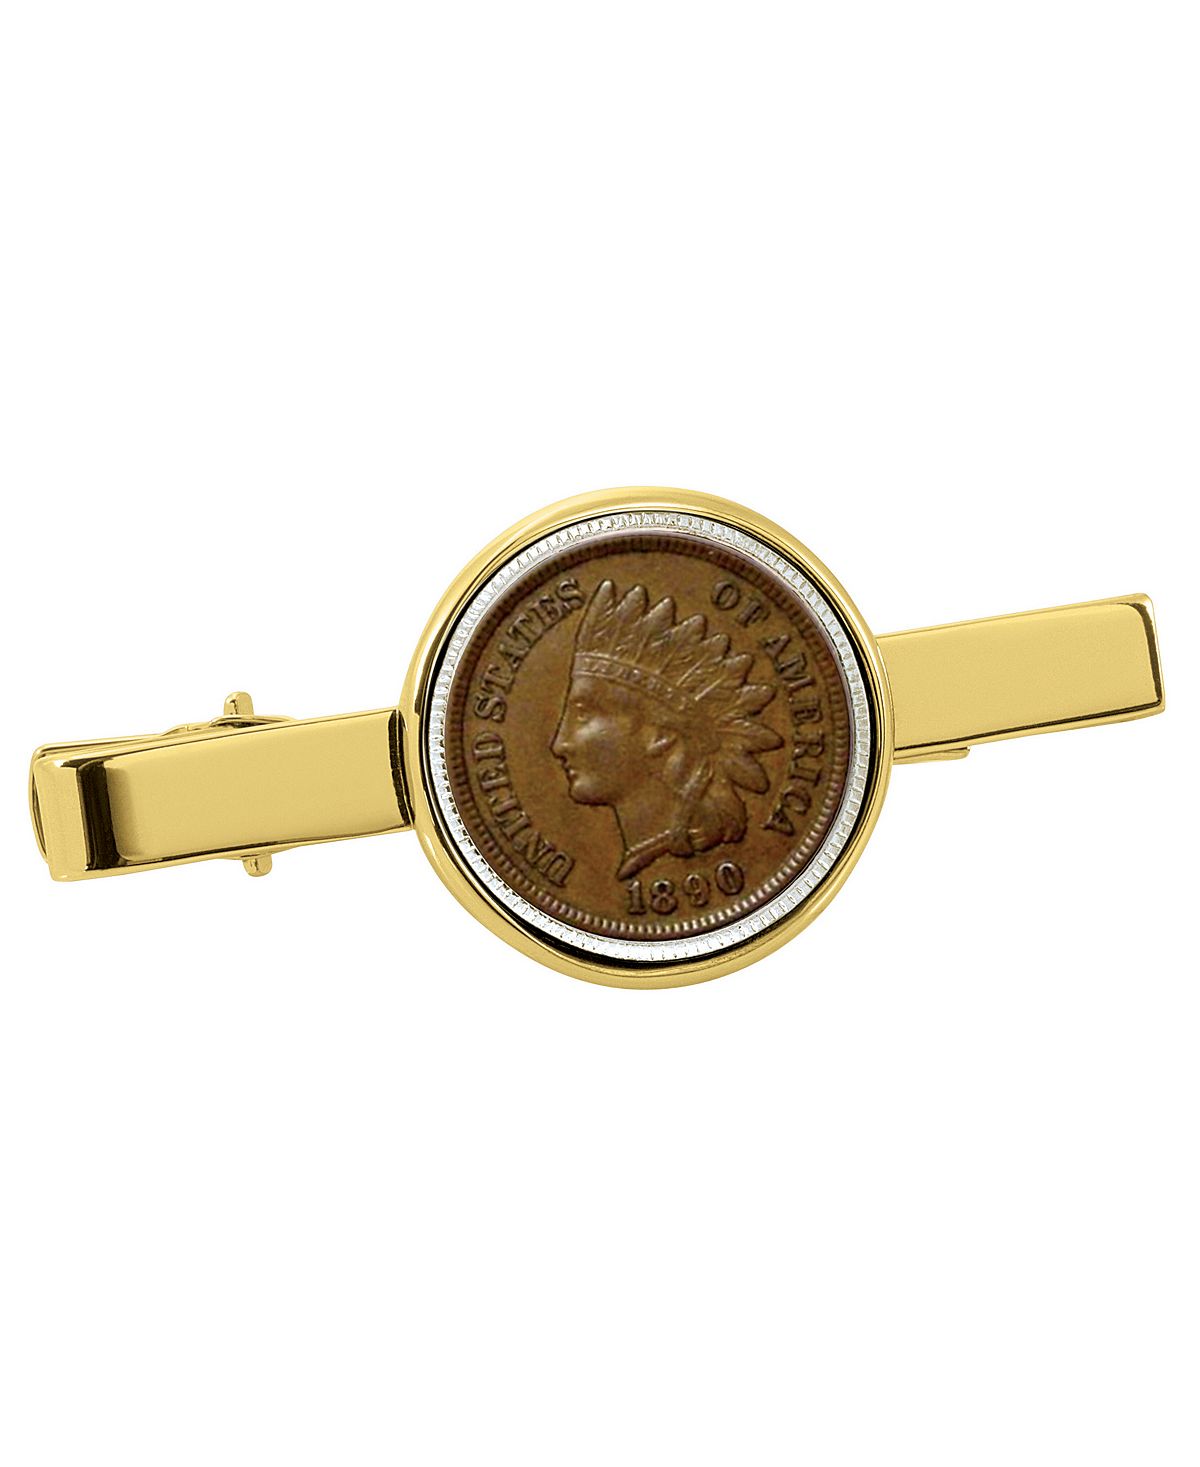 Зажим для галстука в виде индийской монеты-пенни 1800-х годов American Coin Treasures challenge coin commemorative coin ugly skeleton commemorative coin gold coin freak anniversary badge gift